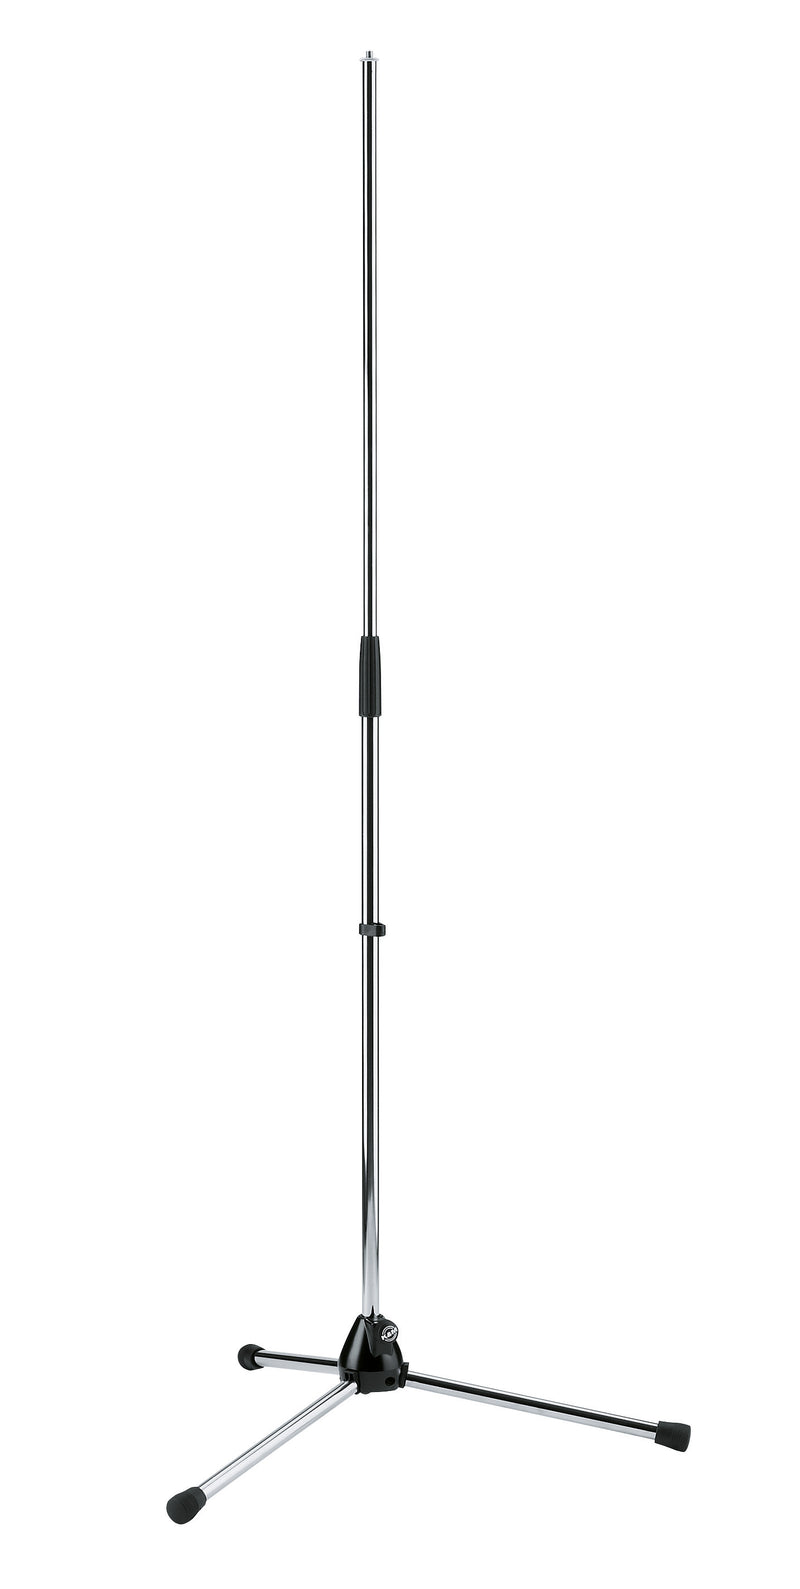 K&M 201A/2 Microphone stand - 20130-300-02 - chrome